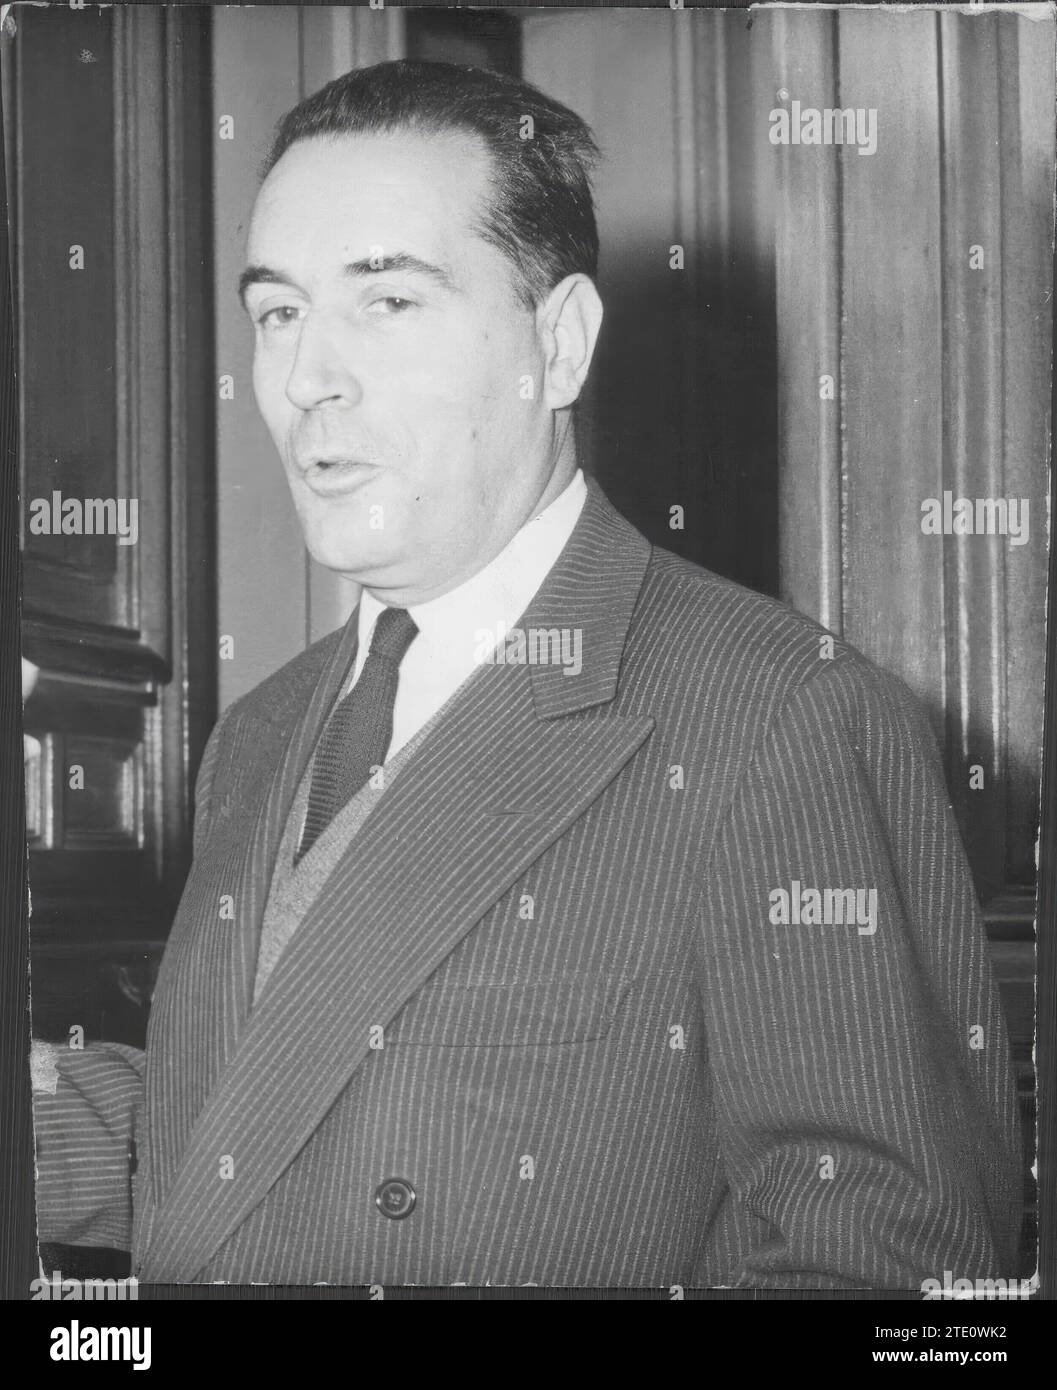 12/31/1959. An image of Francois Mitterrand. Credit: Album / Archivo ABC / Torremocha Stock Photo